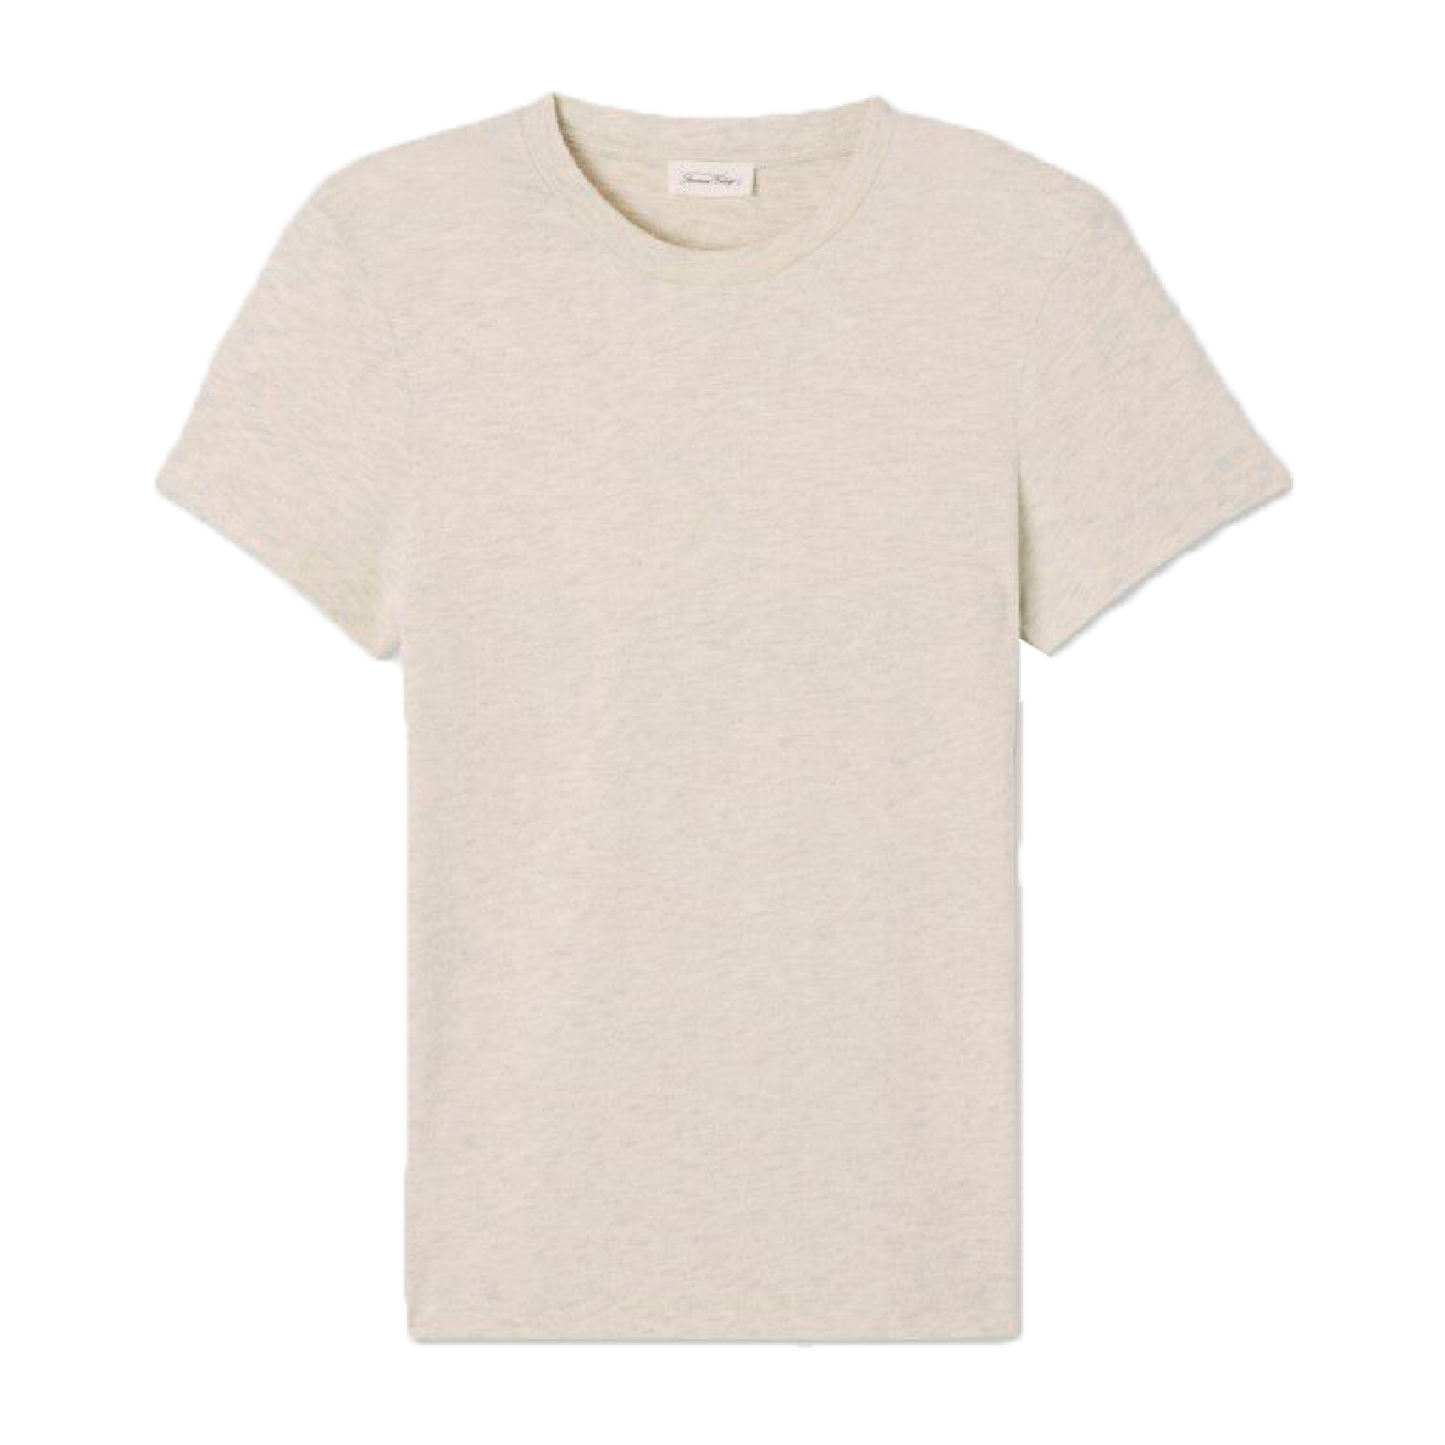 Ypawood T-Shirt, Light Grey